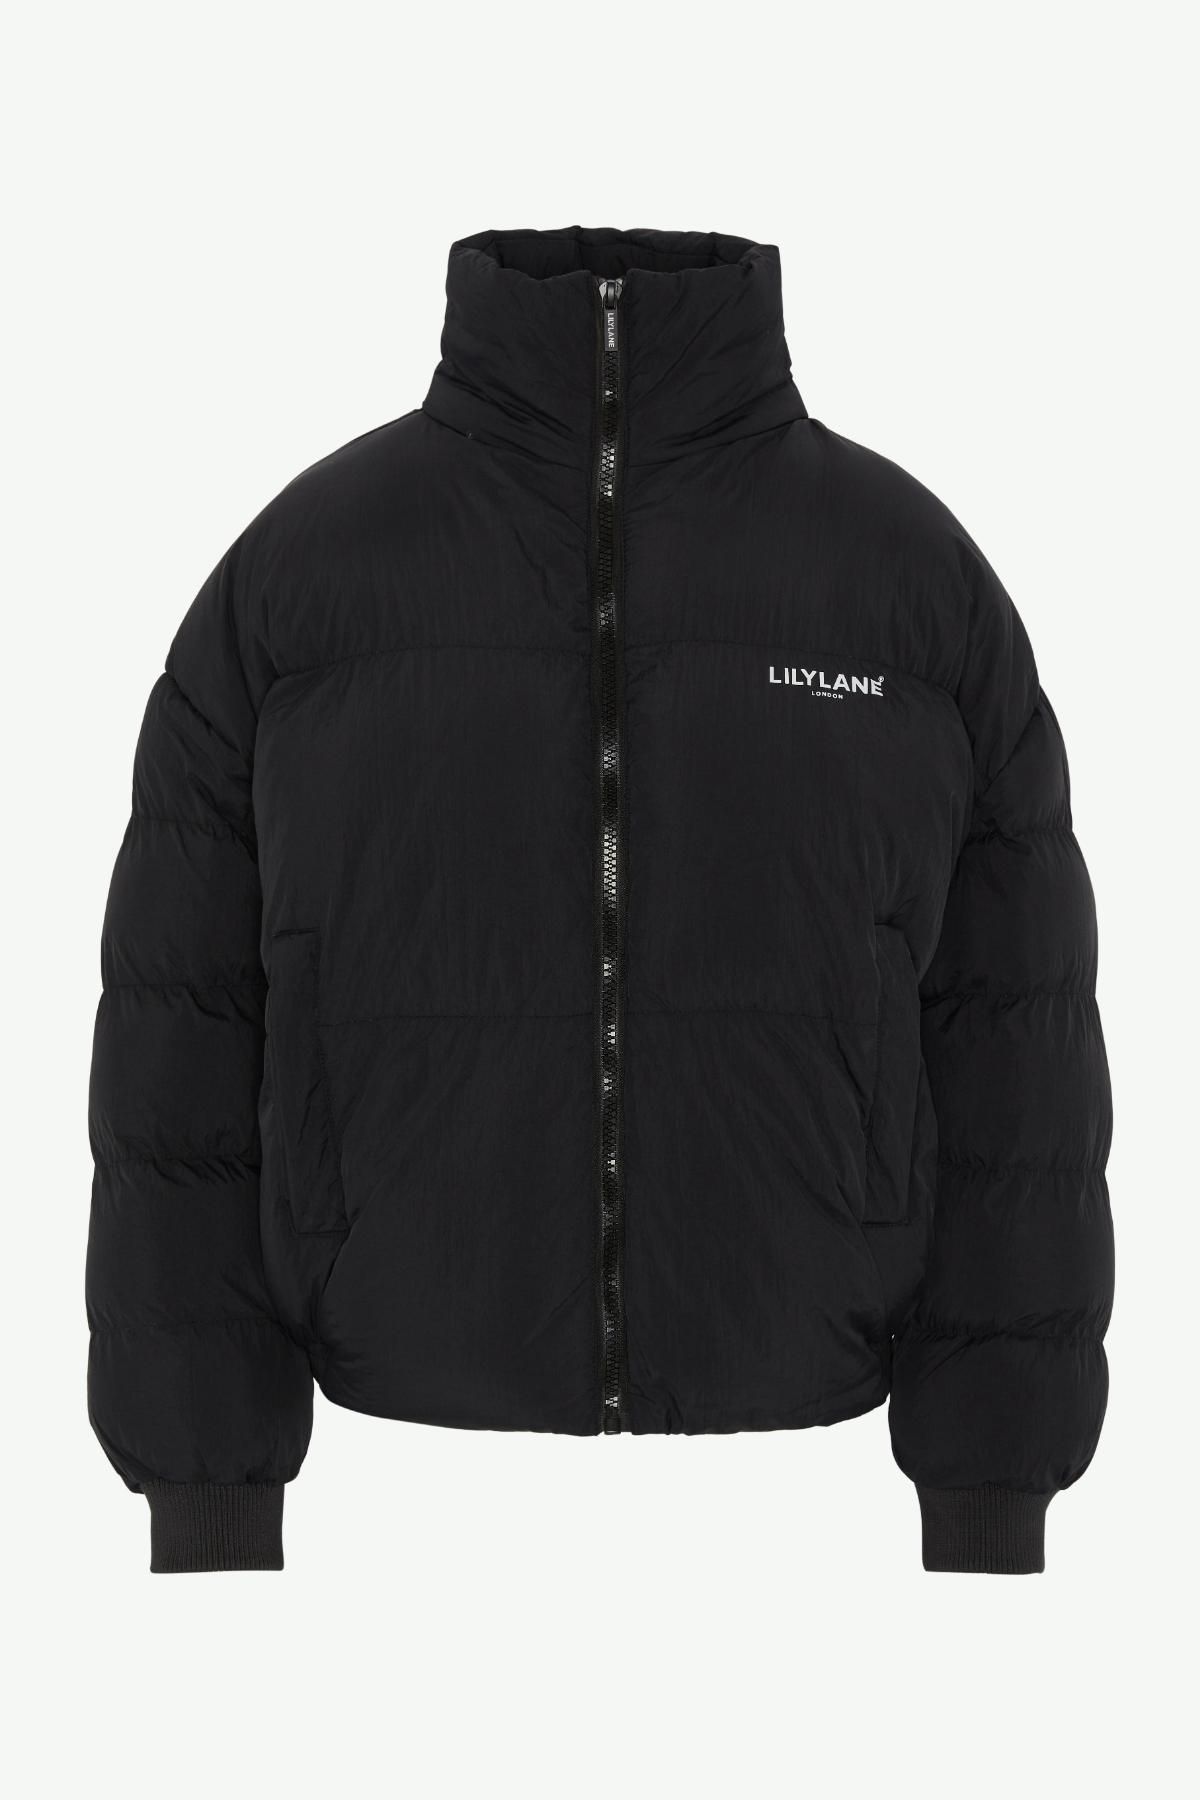 Lily Lane Womens Puffer Jacket Black